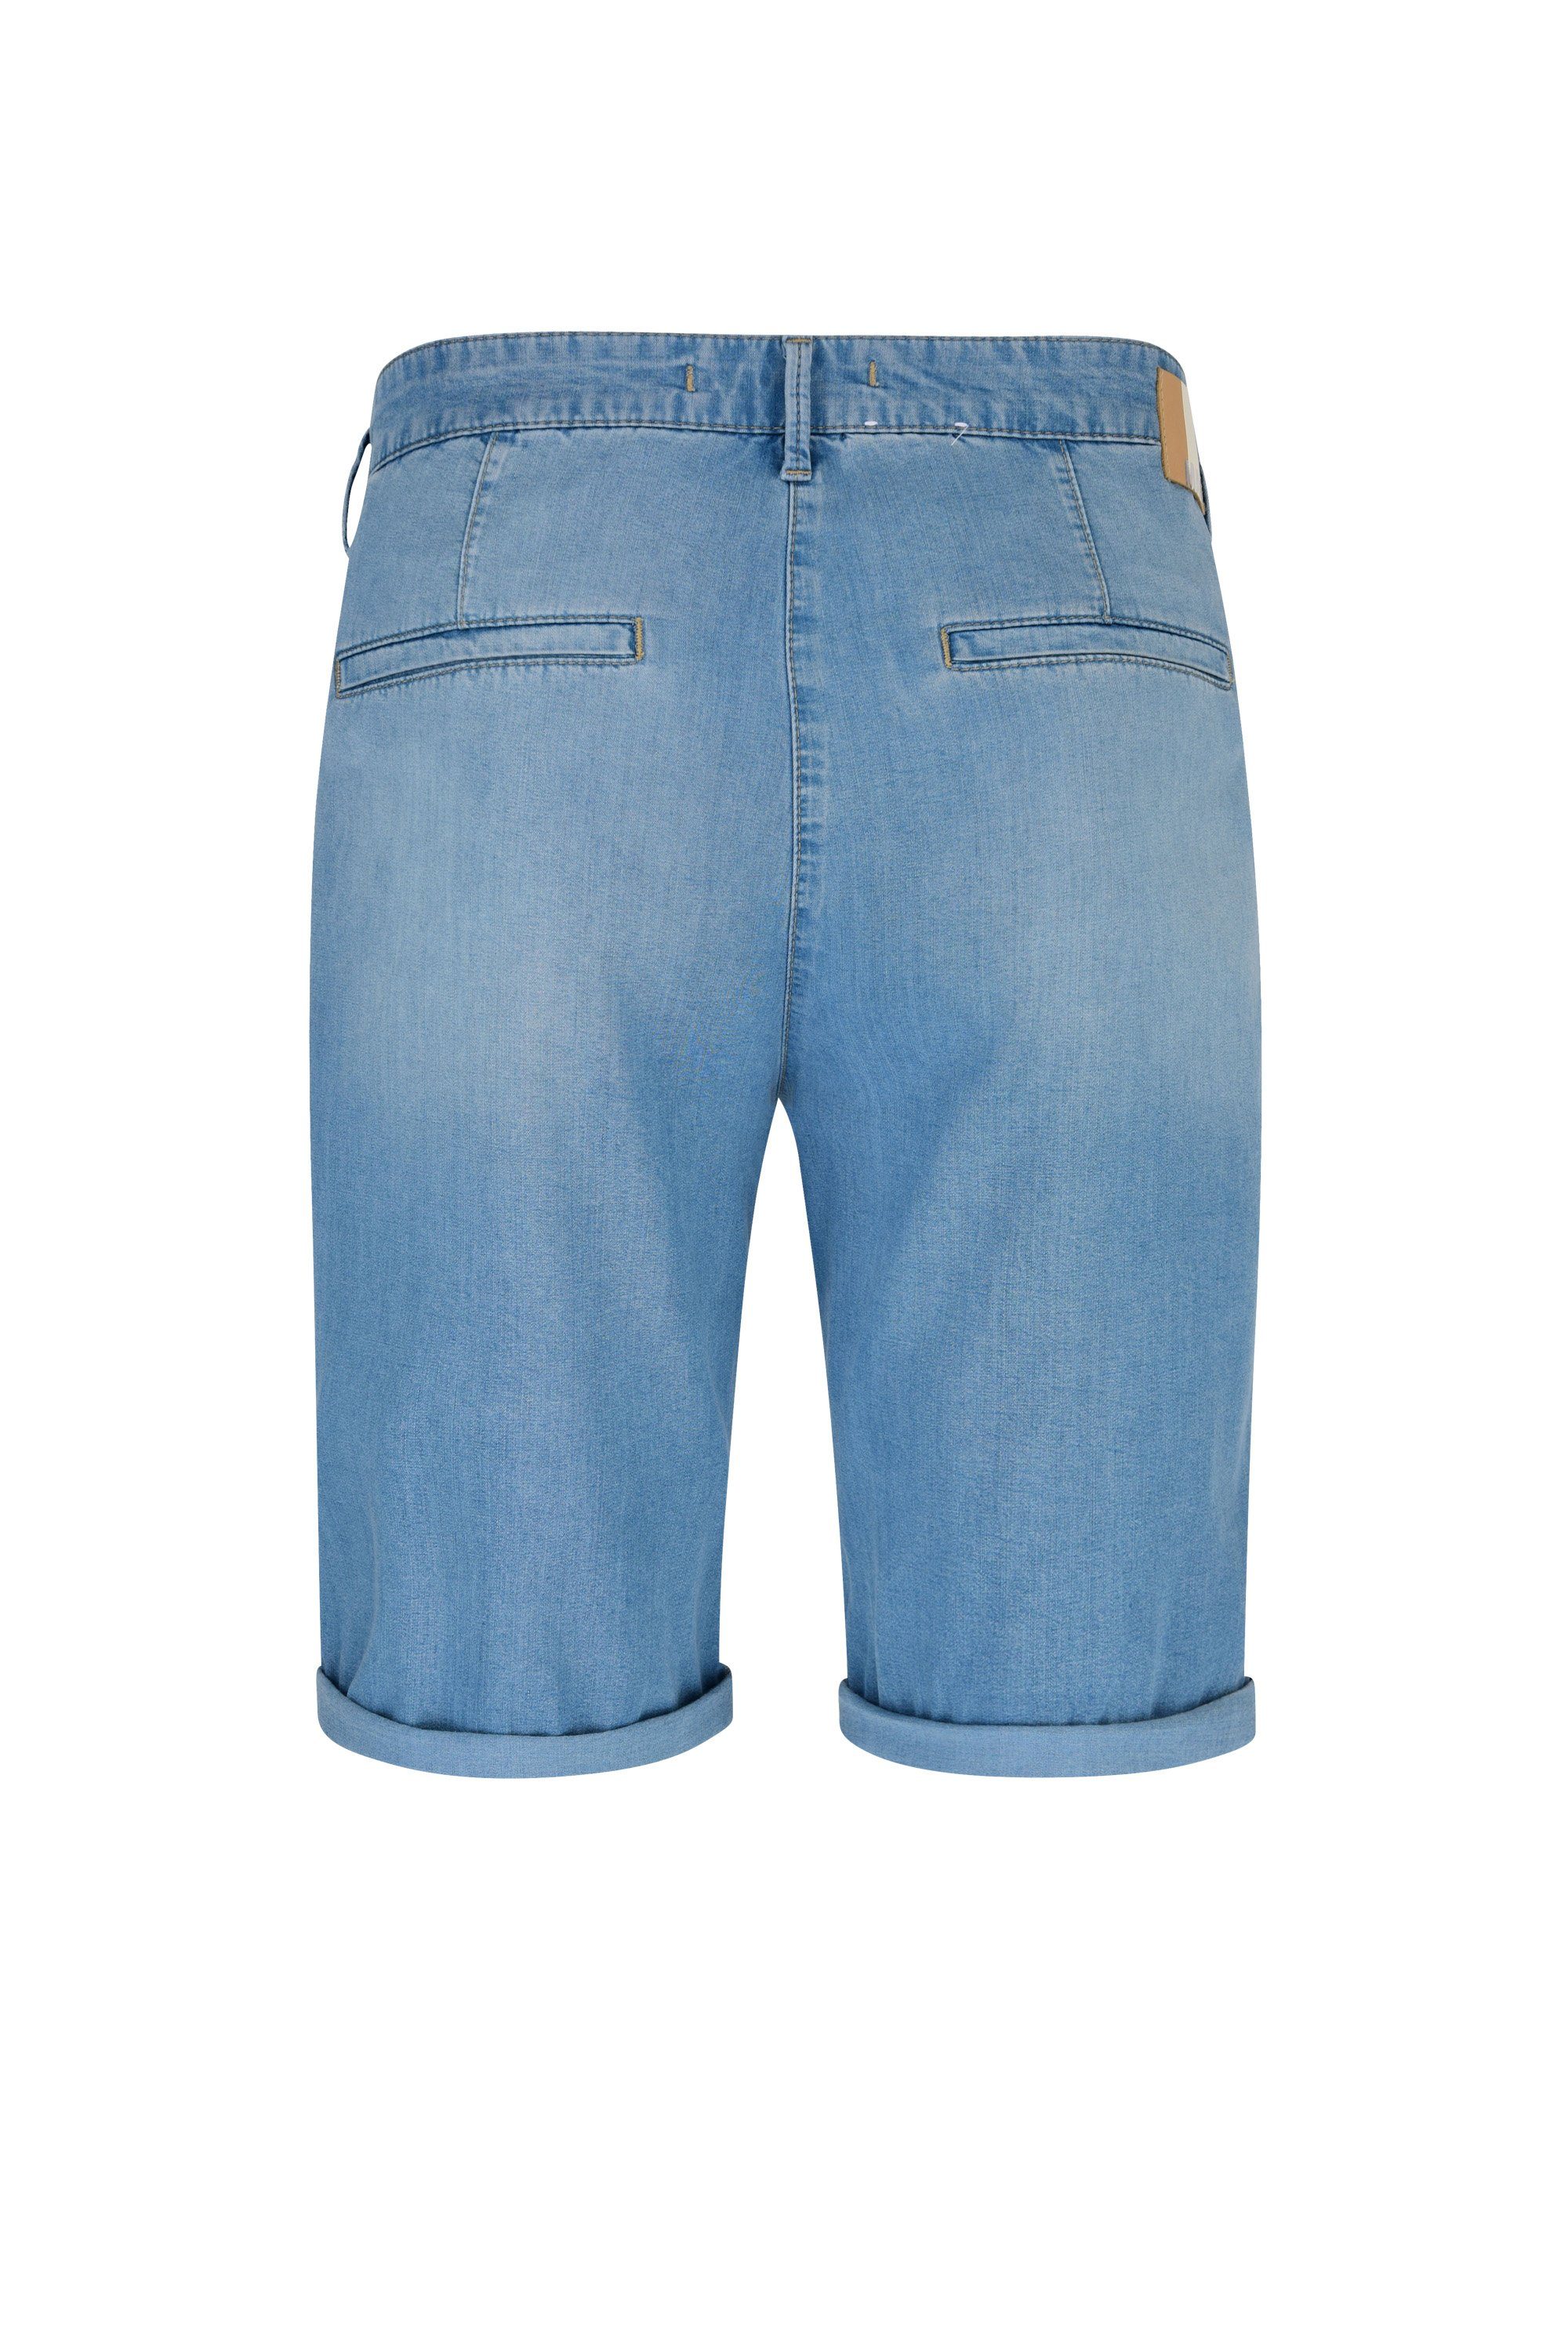 CHINO basic blue Stretch-Jeans SHORTS MAC wash D422 3069-90-0317 MAC